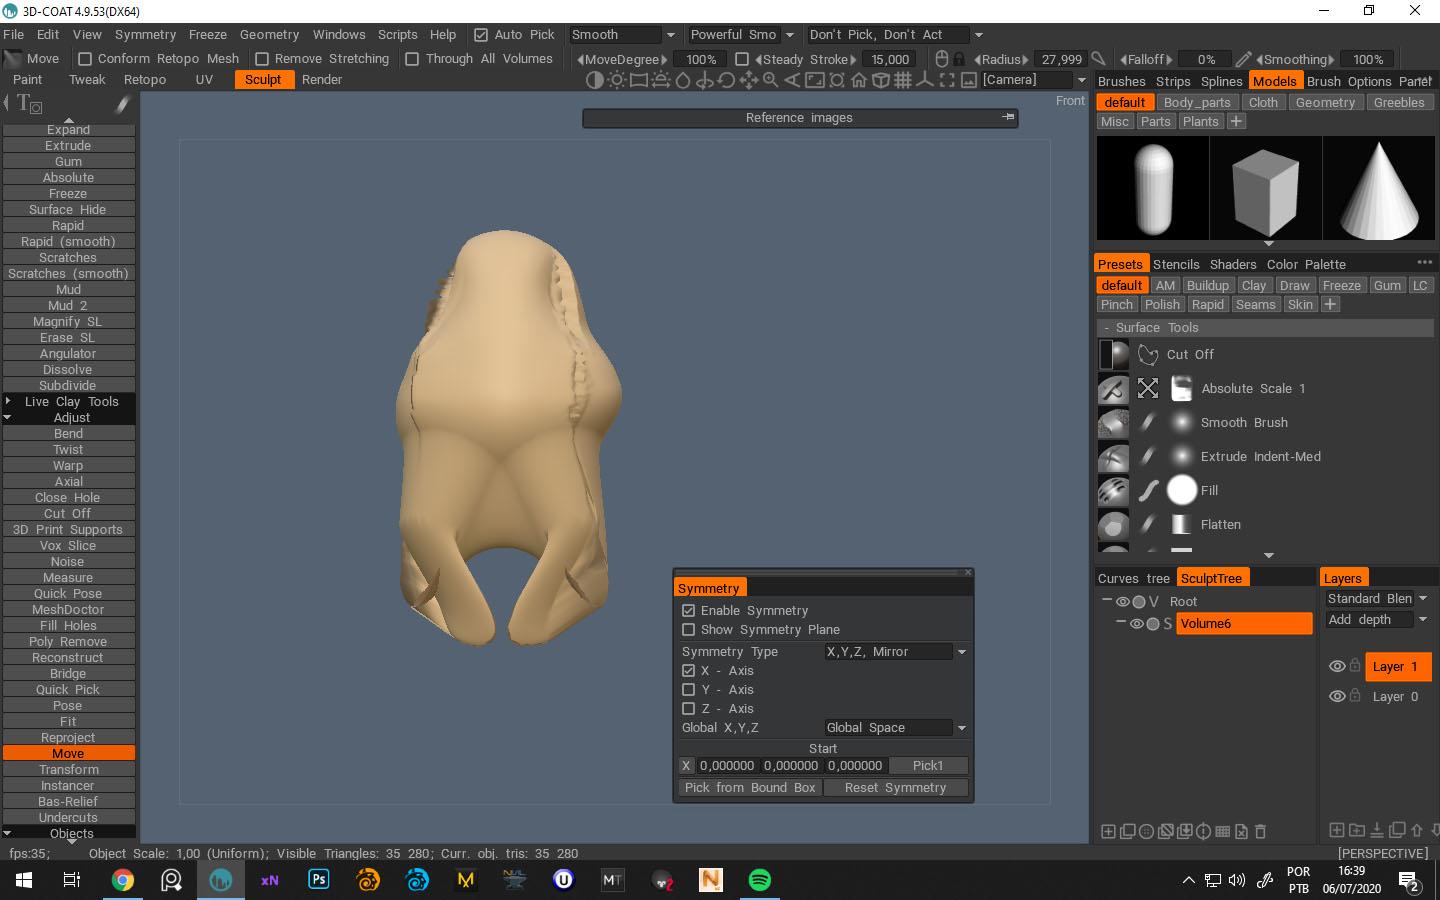 Sleeping Serena Man 3D model community • 3D modeling forum • 3D printing forum - 3D Coat